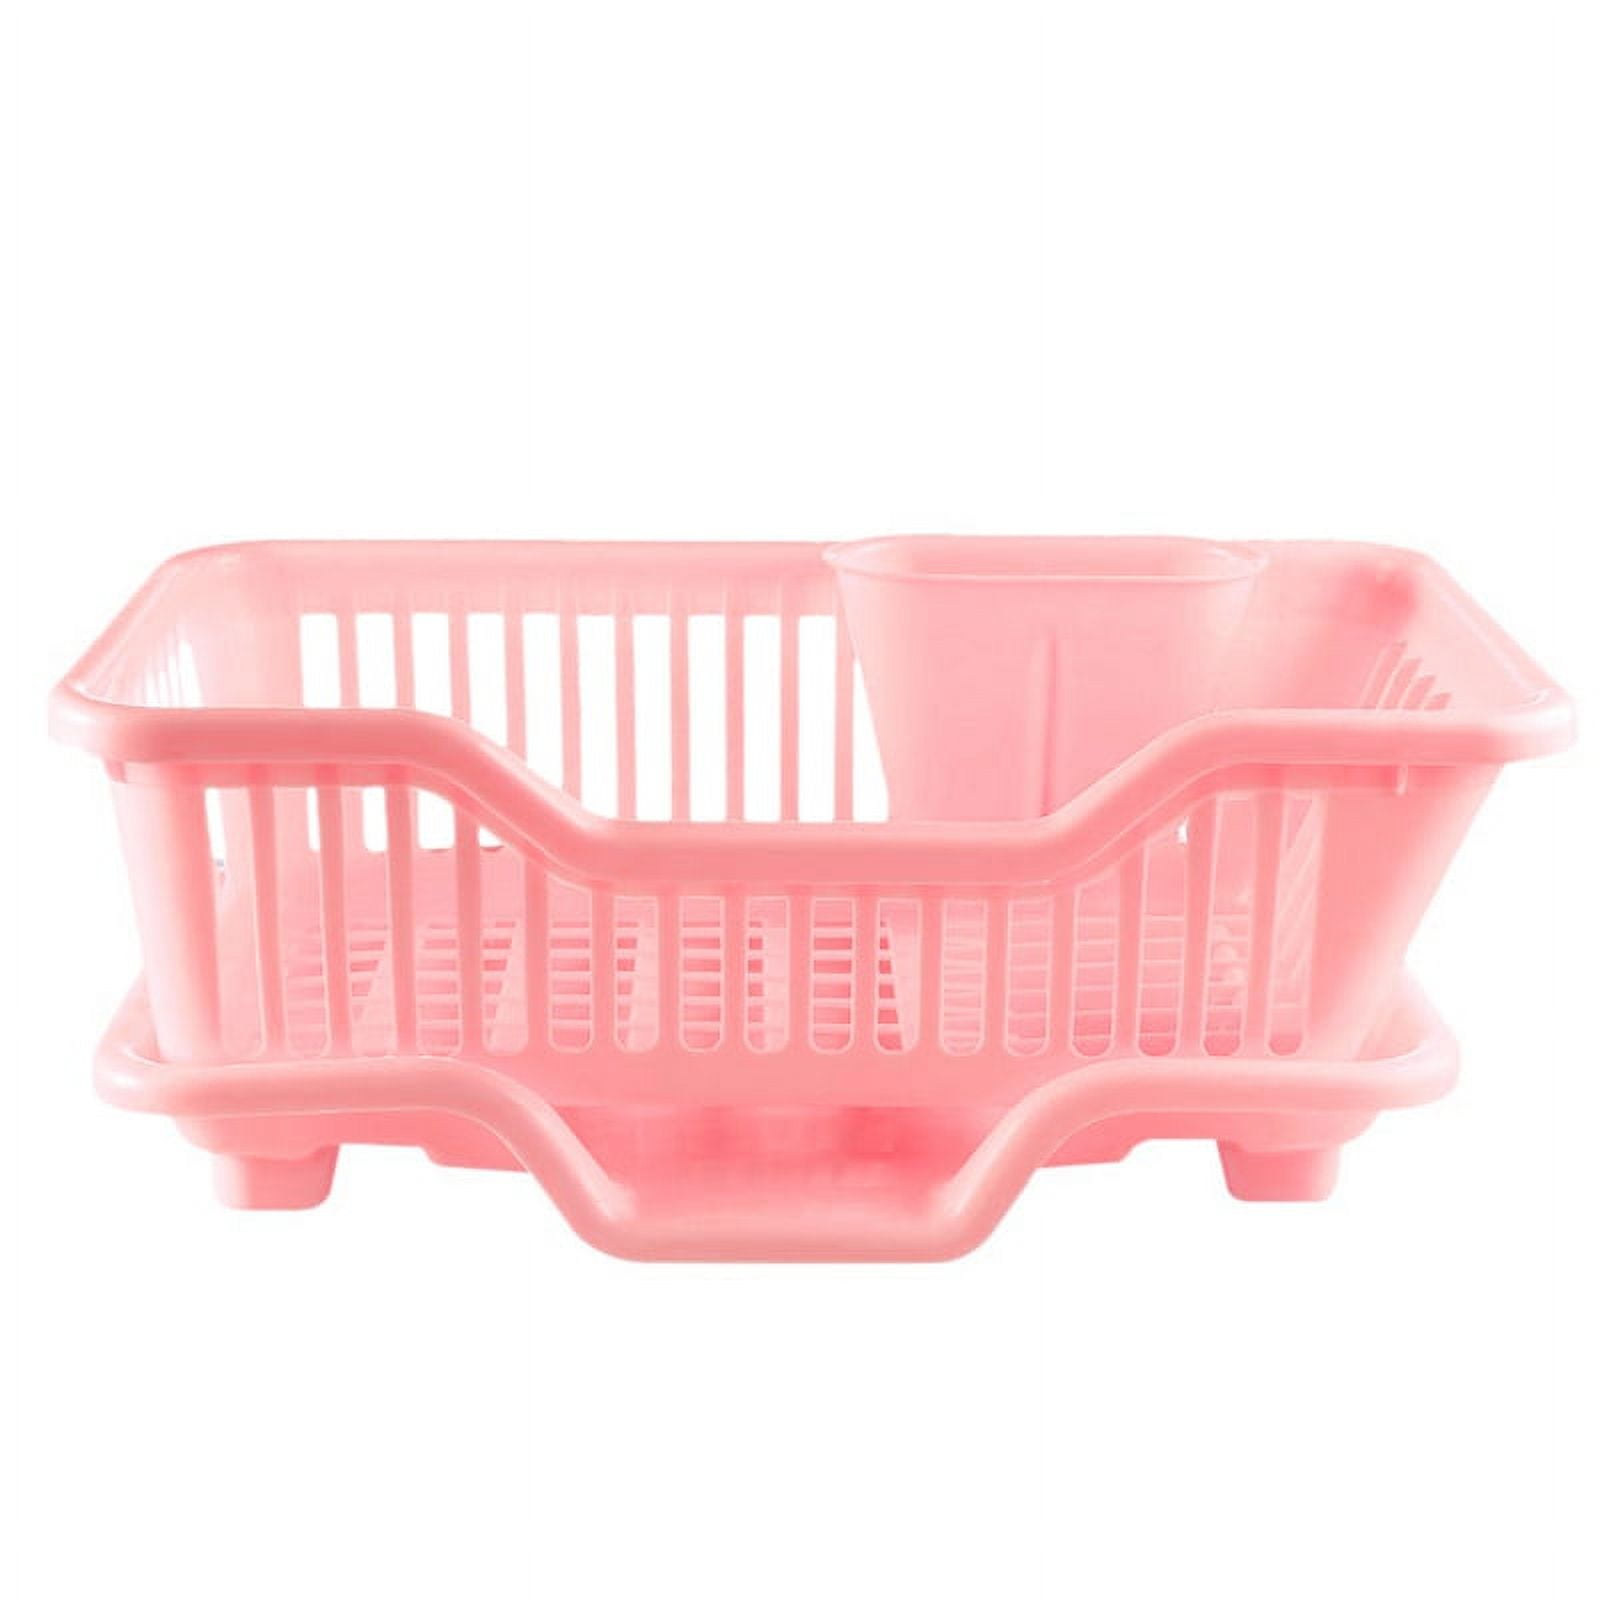  XHHOME Environmental PP Plastic Kitchen Sink Dish Drainer Set  Rack Washing Holder Basket Organizer Tray, Approx 17.5 x 9.5'' x 7'' (Pink)